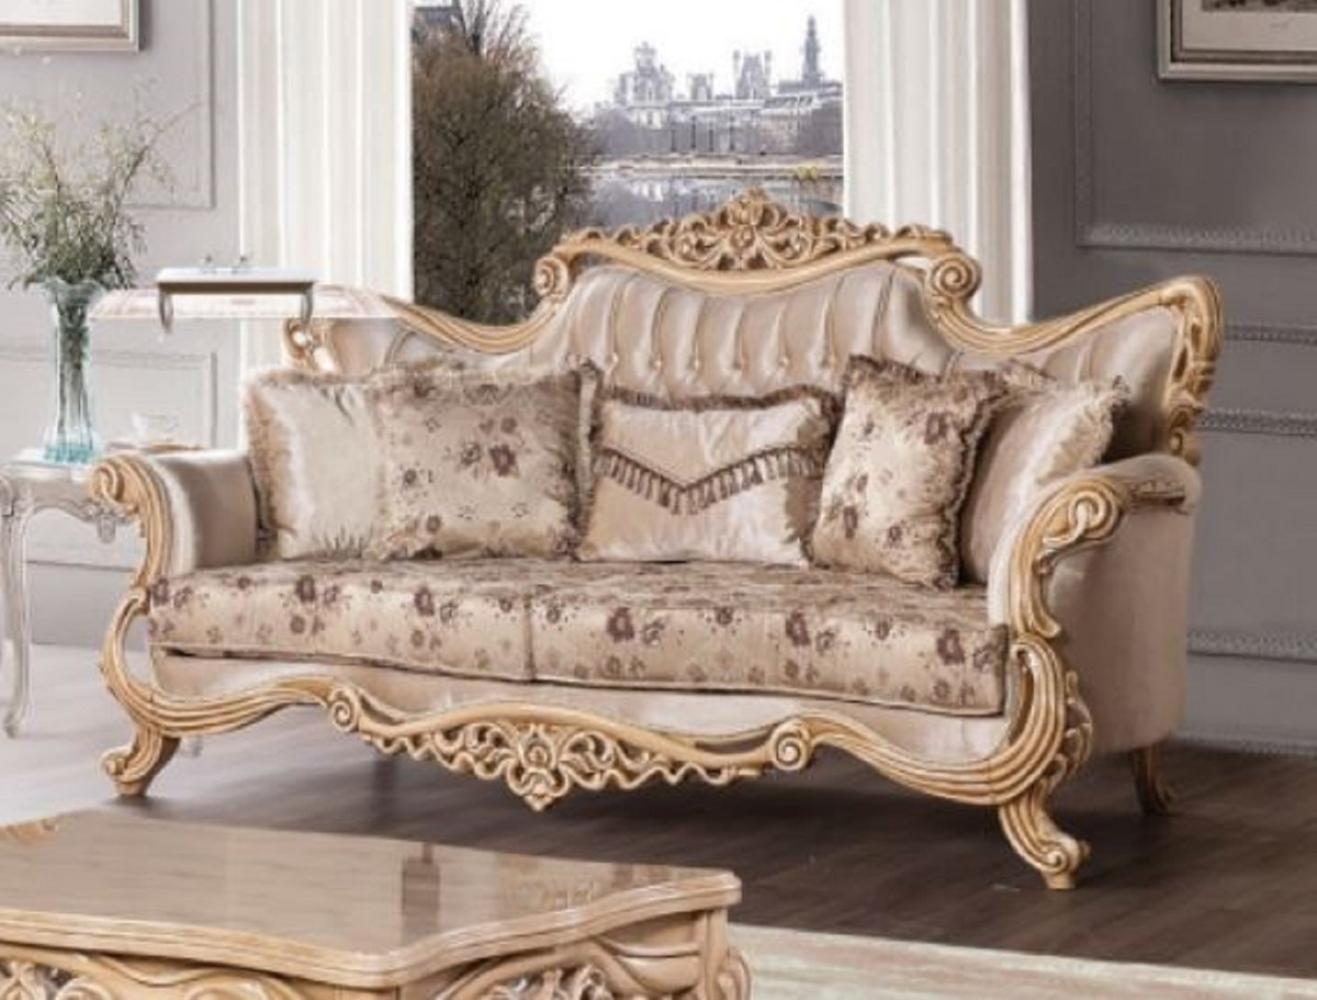 Casa Padrino Luxus Barock Sofa Beige / Braun / Naturfarben - Prunkvolles Wohnzimmer Sofa mit elegantem Muster - Barock Möbel - Edel & Prunkvoll Bild 1